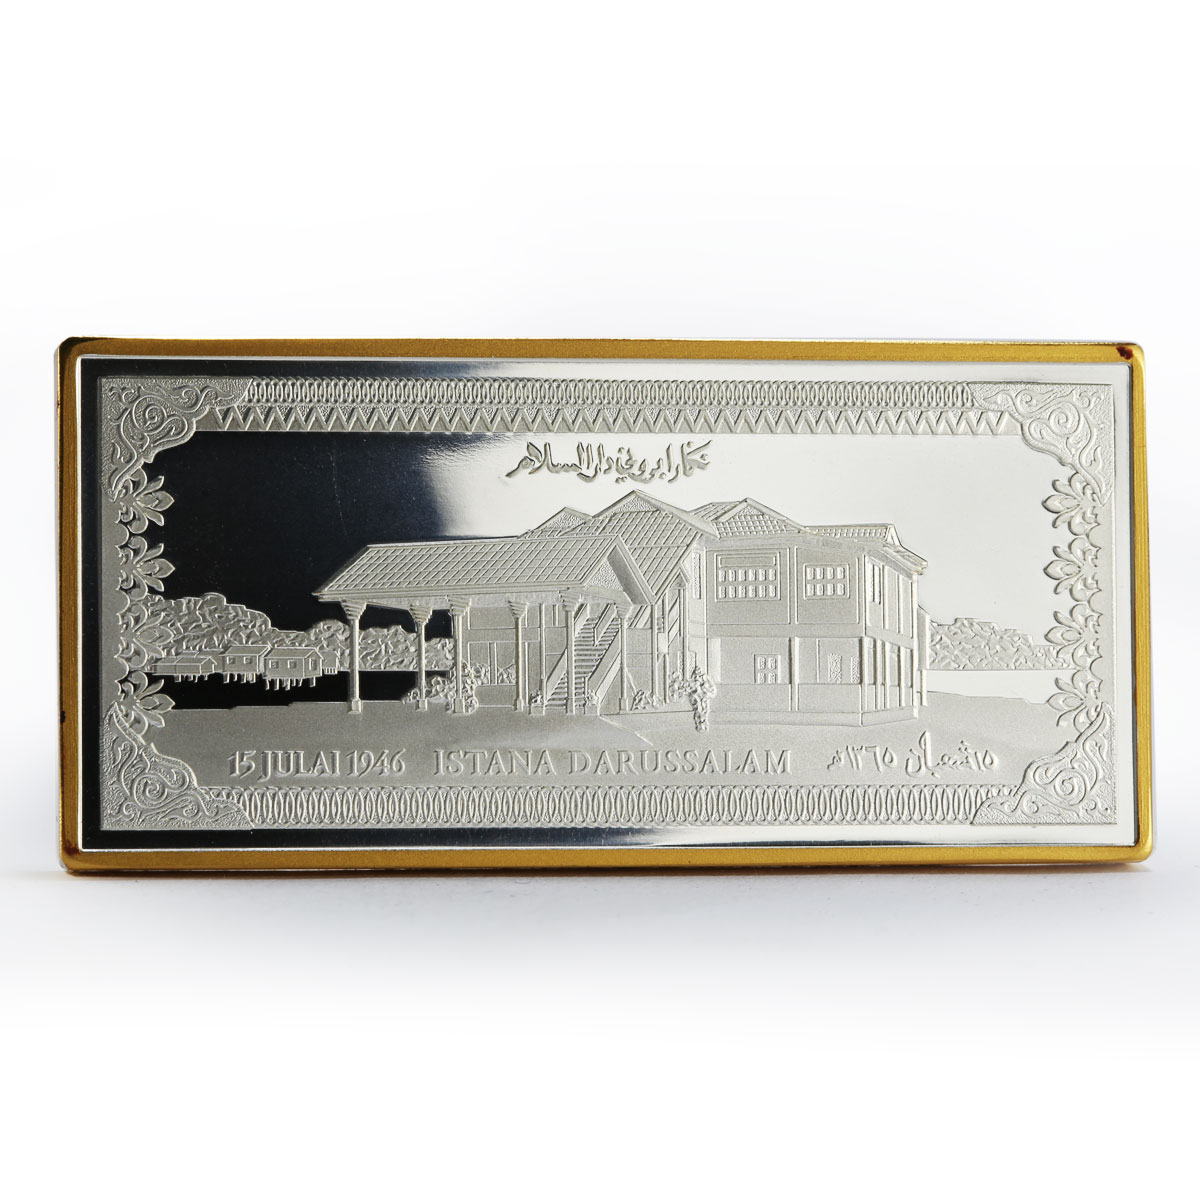 Brunei 50 dollars Sultan Istana Darussalam building gilded proof silver 1996